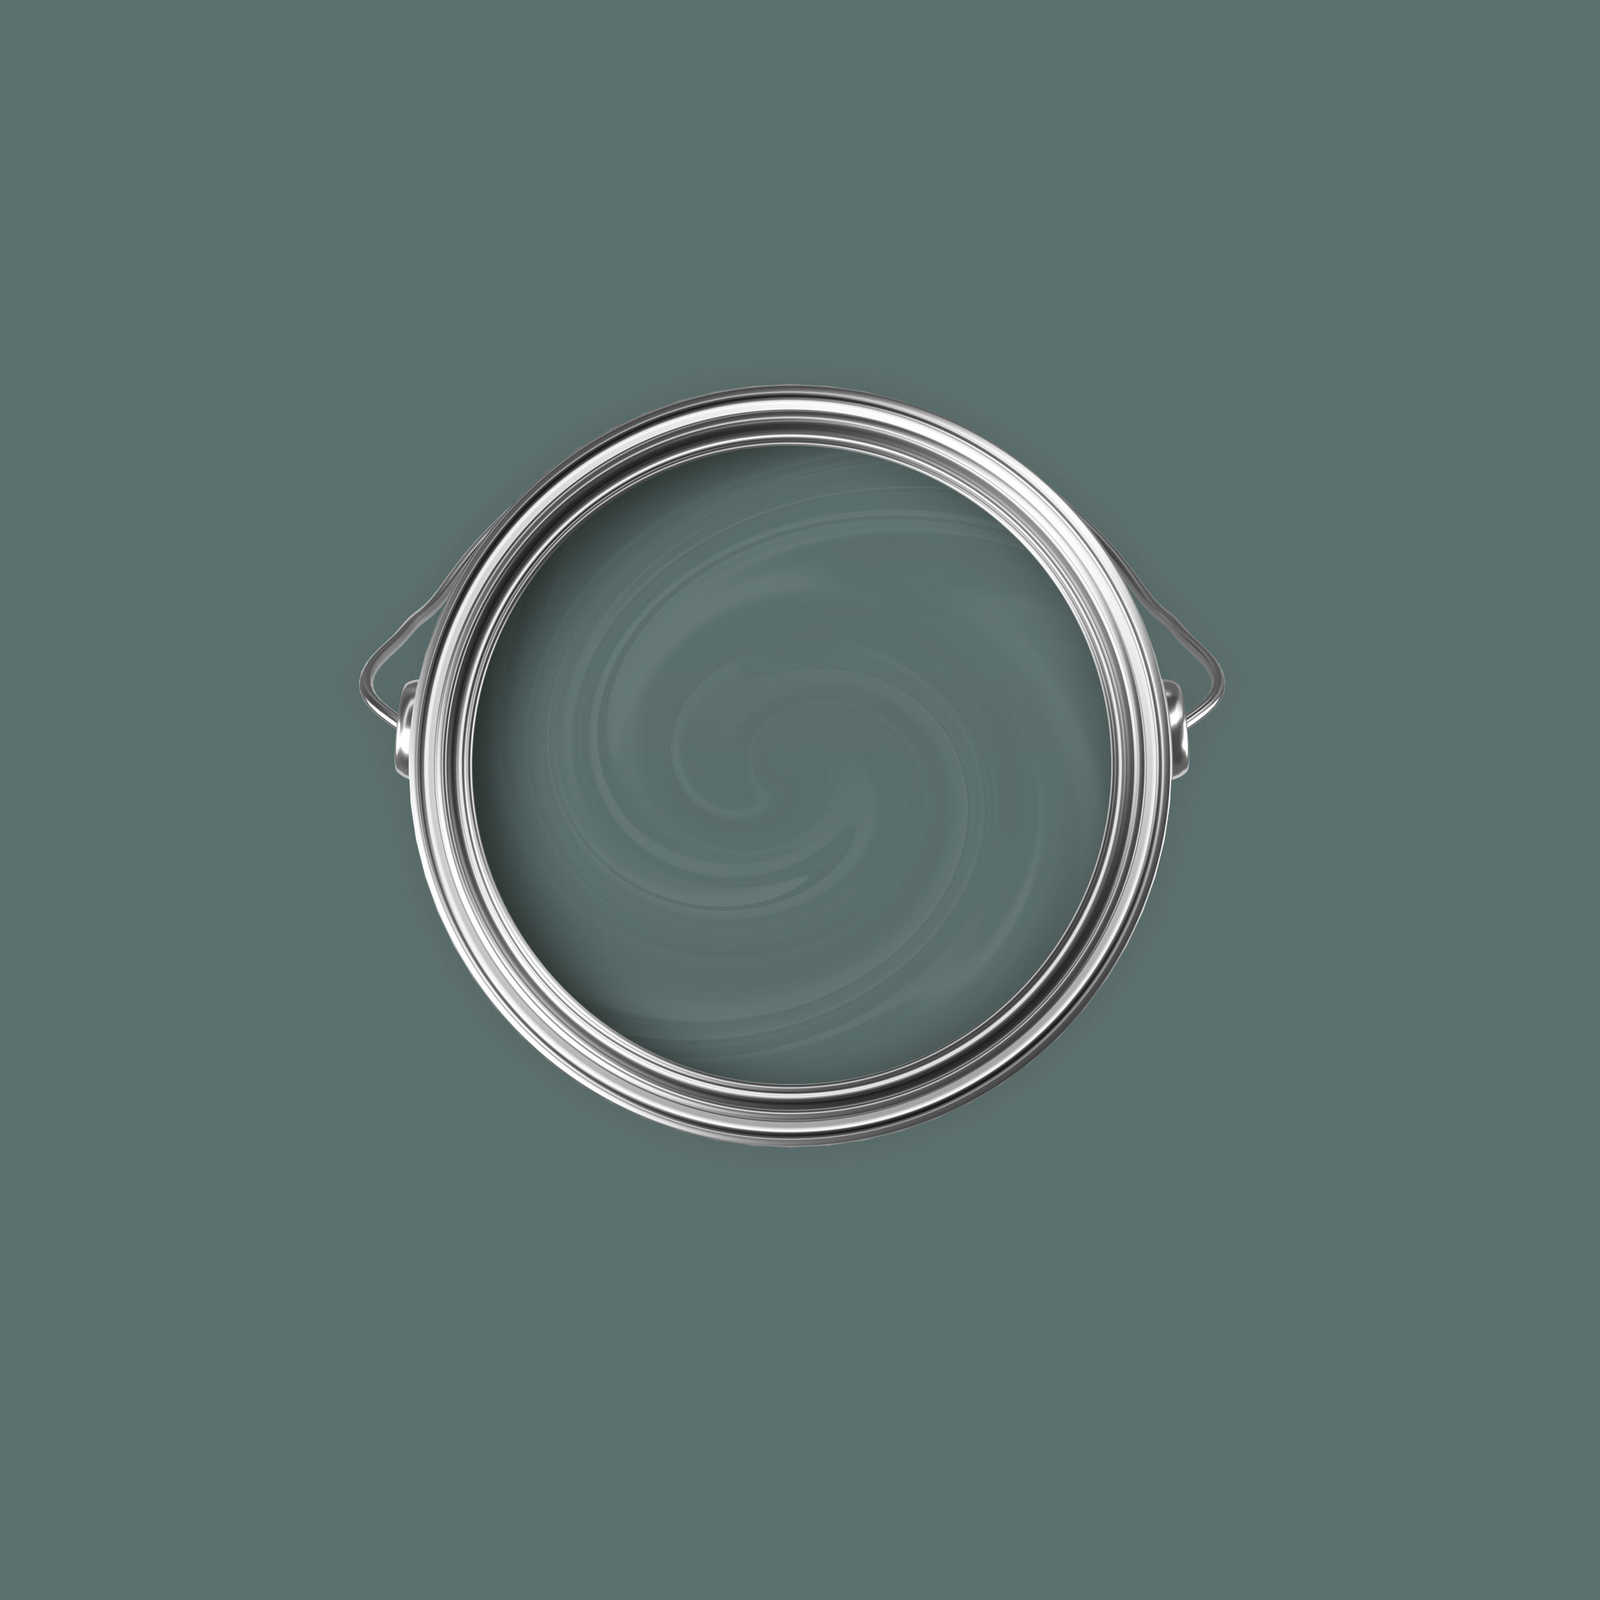             Premium Wandfarbe entspannendes Grau Grün »Sweet Sage« NW405 – 2,5 Liter
        